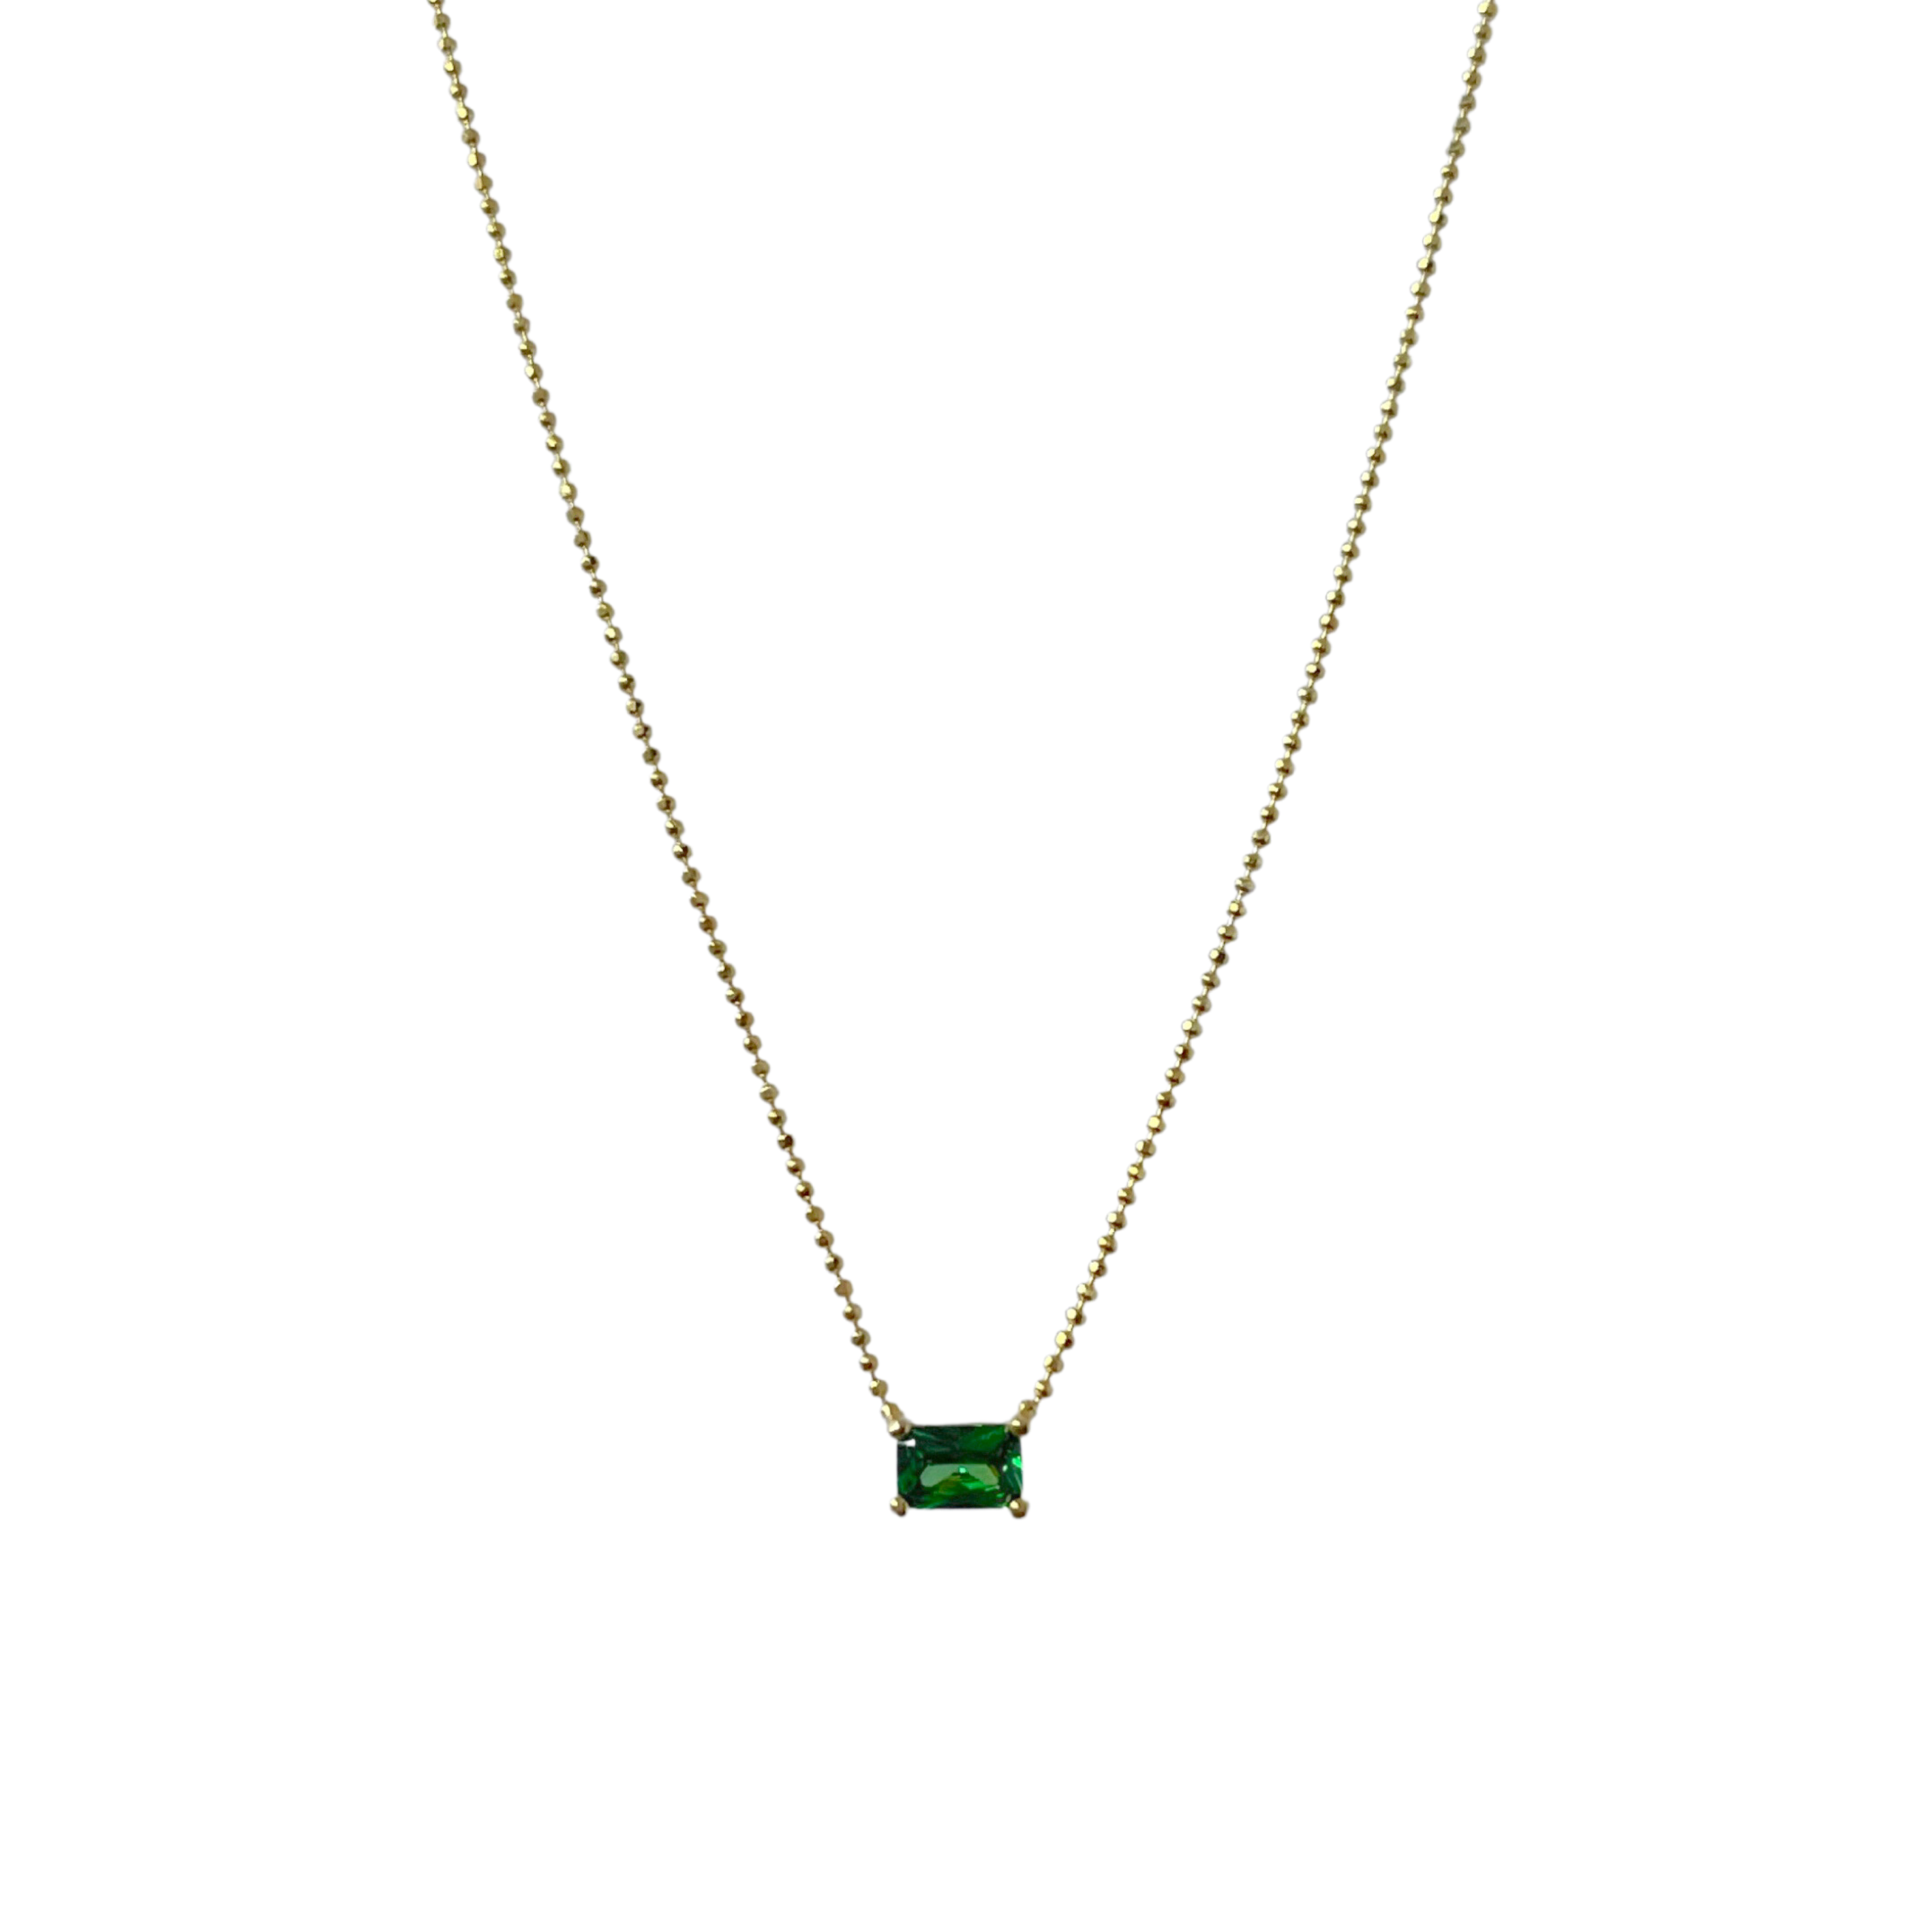 Evergreen Textured Baguette necklace